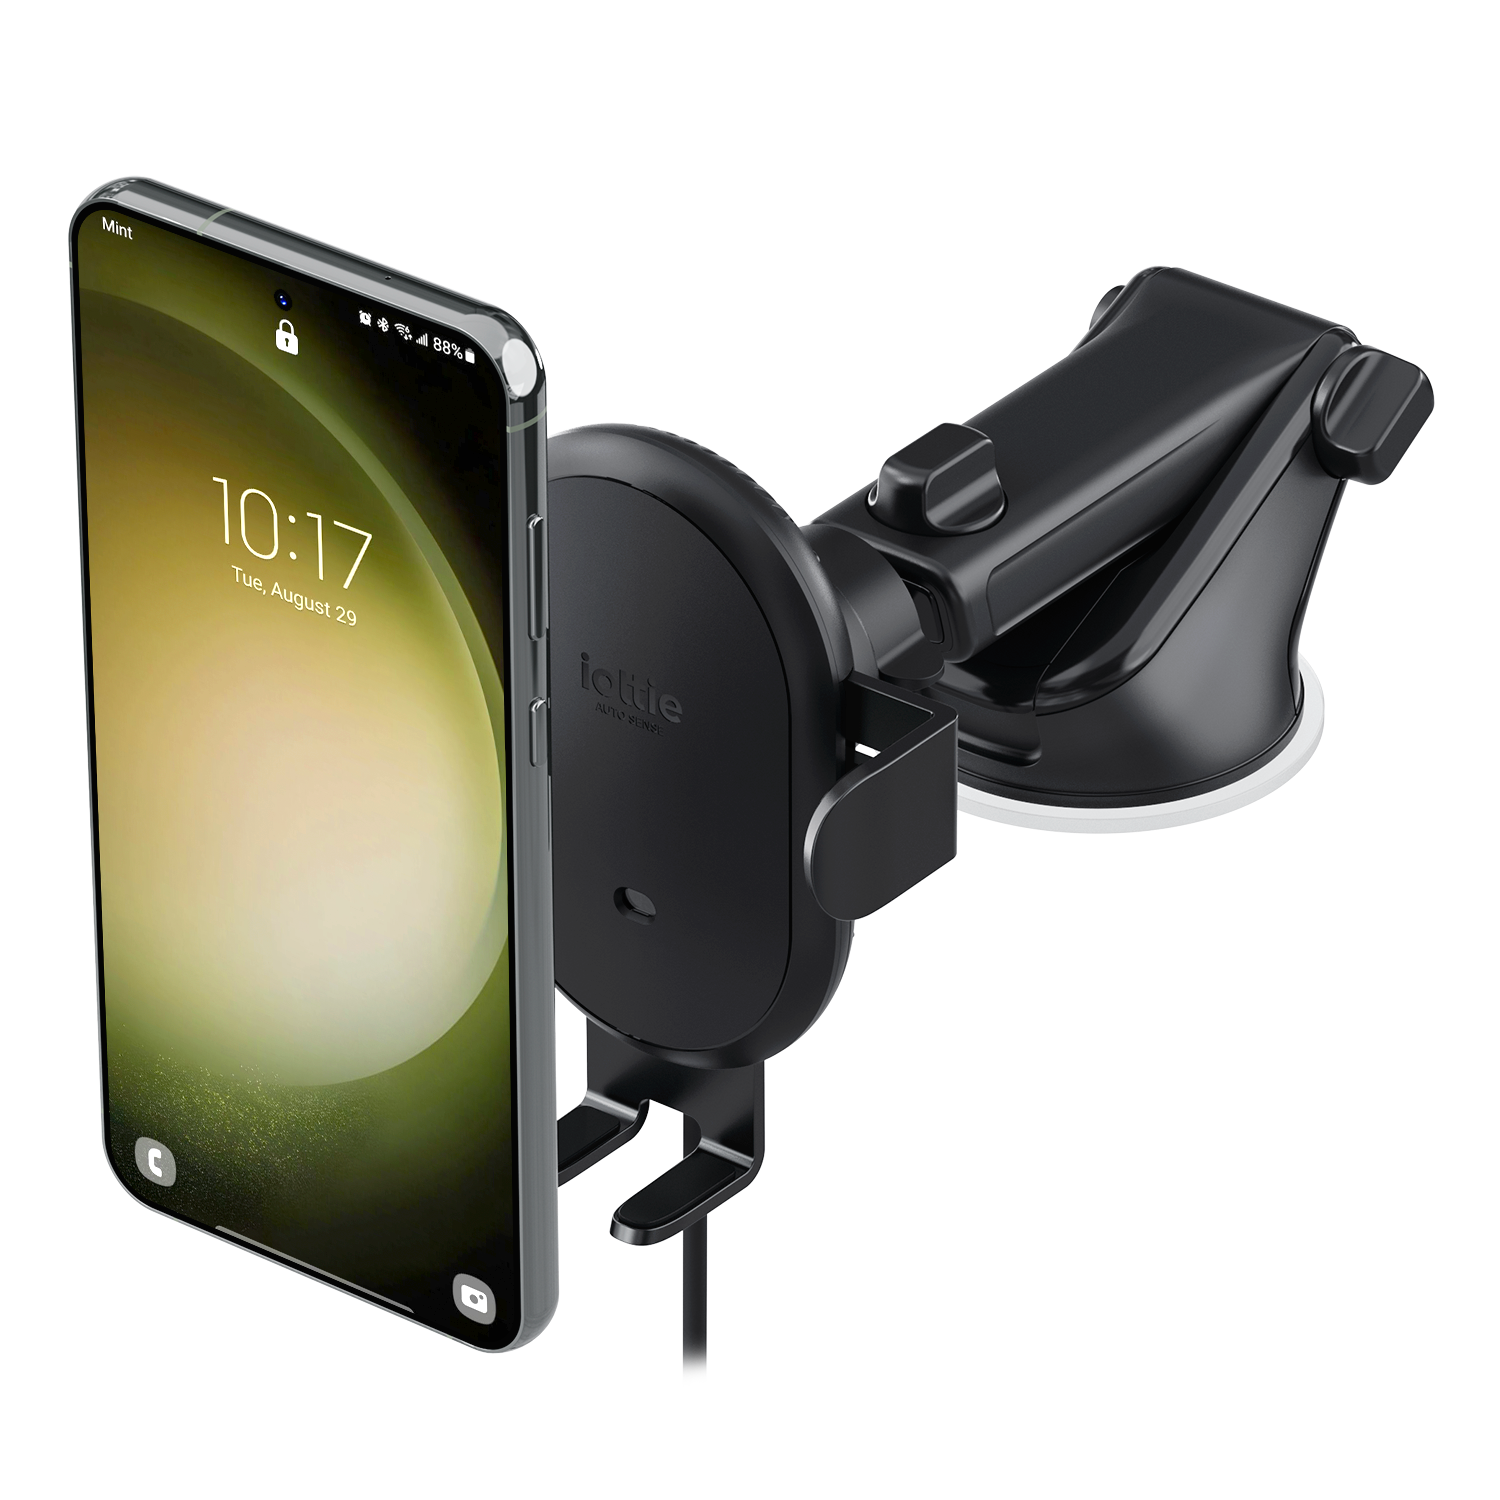 iOttie Auto Sense Adjustable Black Car Mount for Universal Cell Phones  HLCRIO164